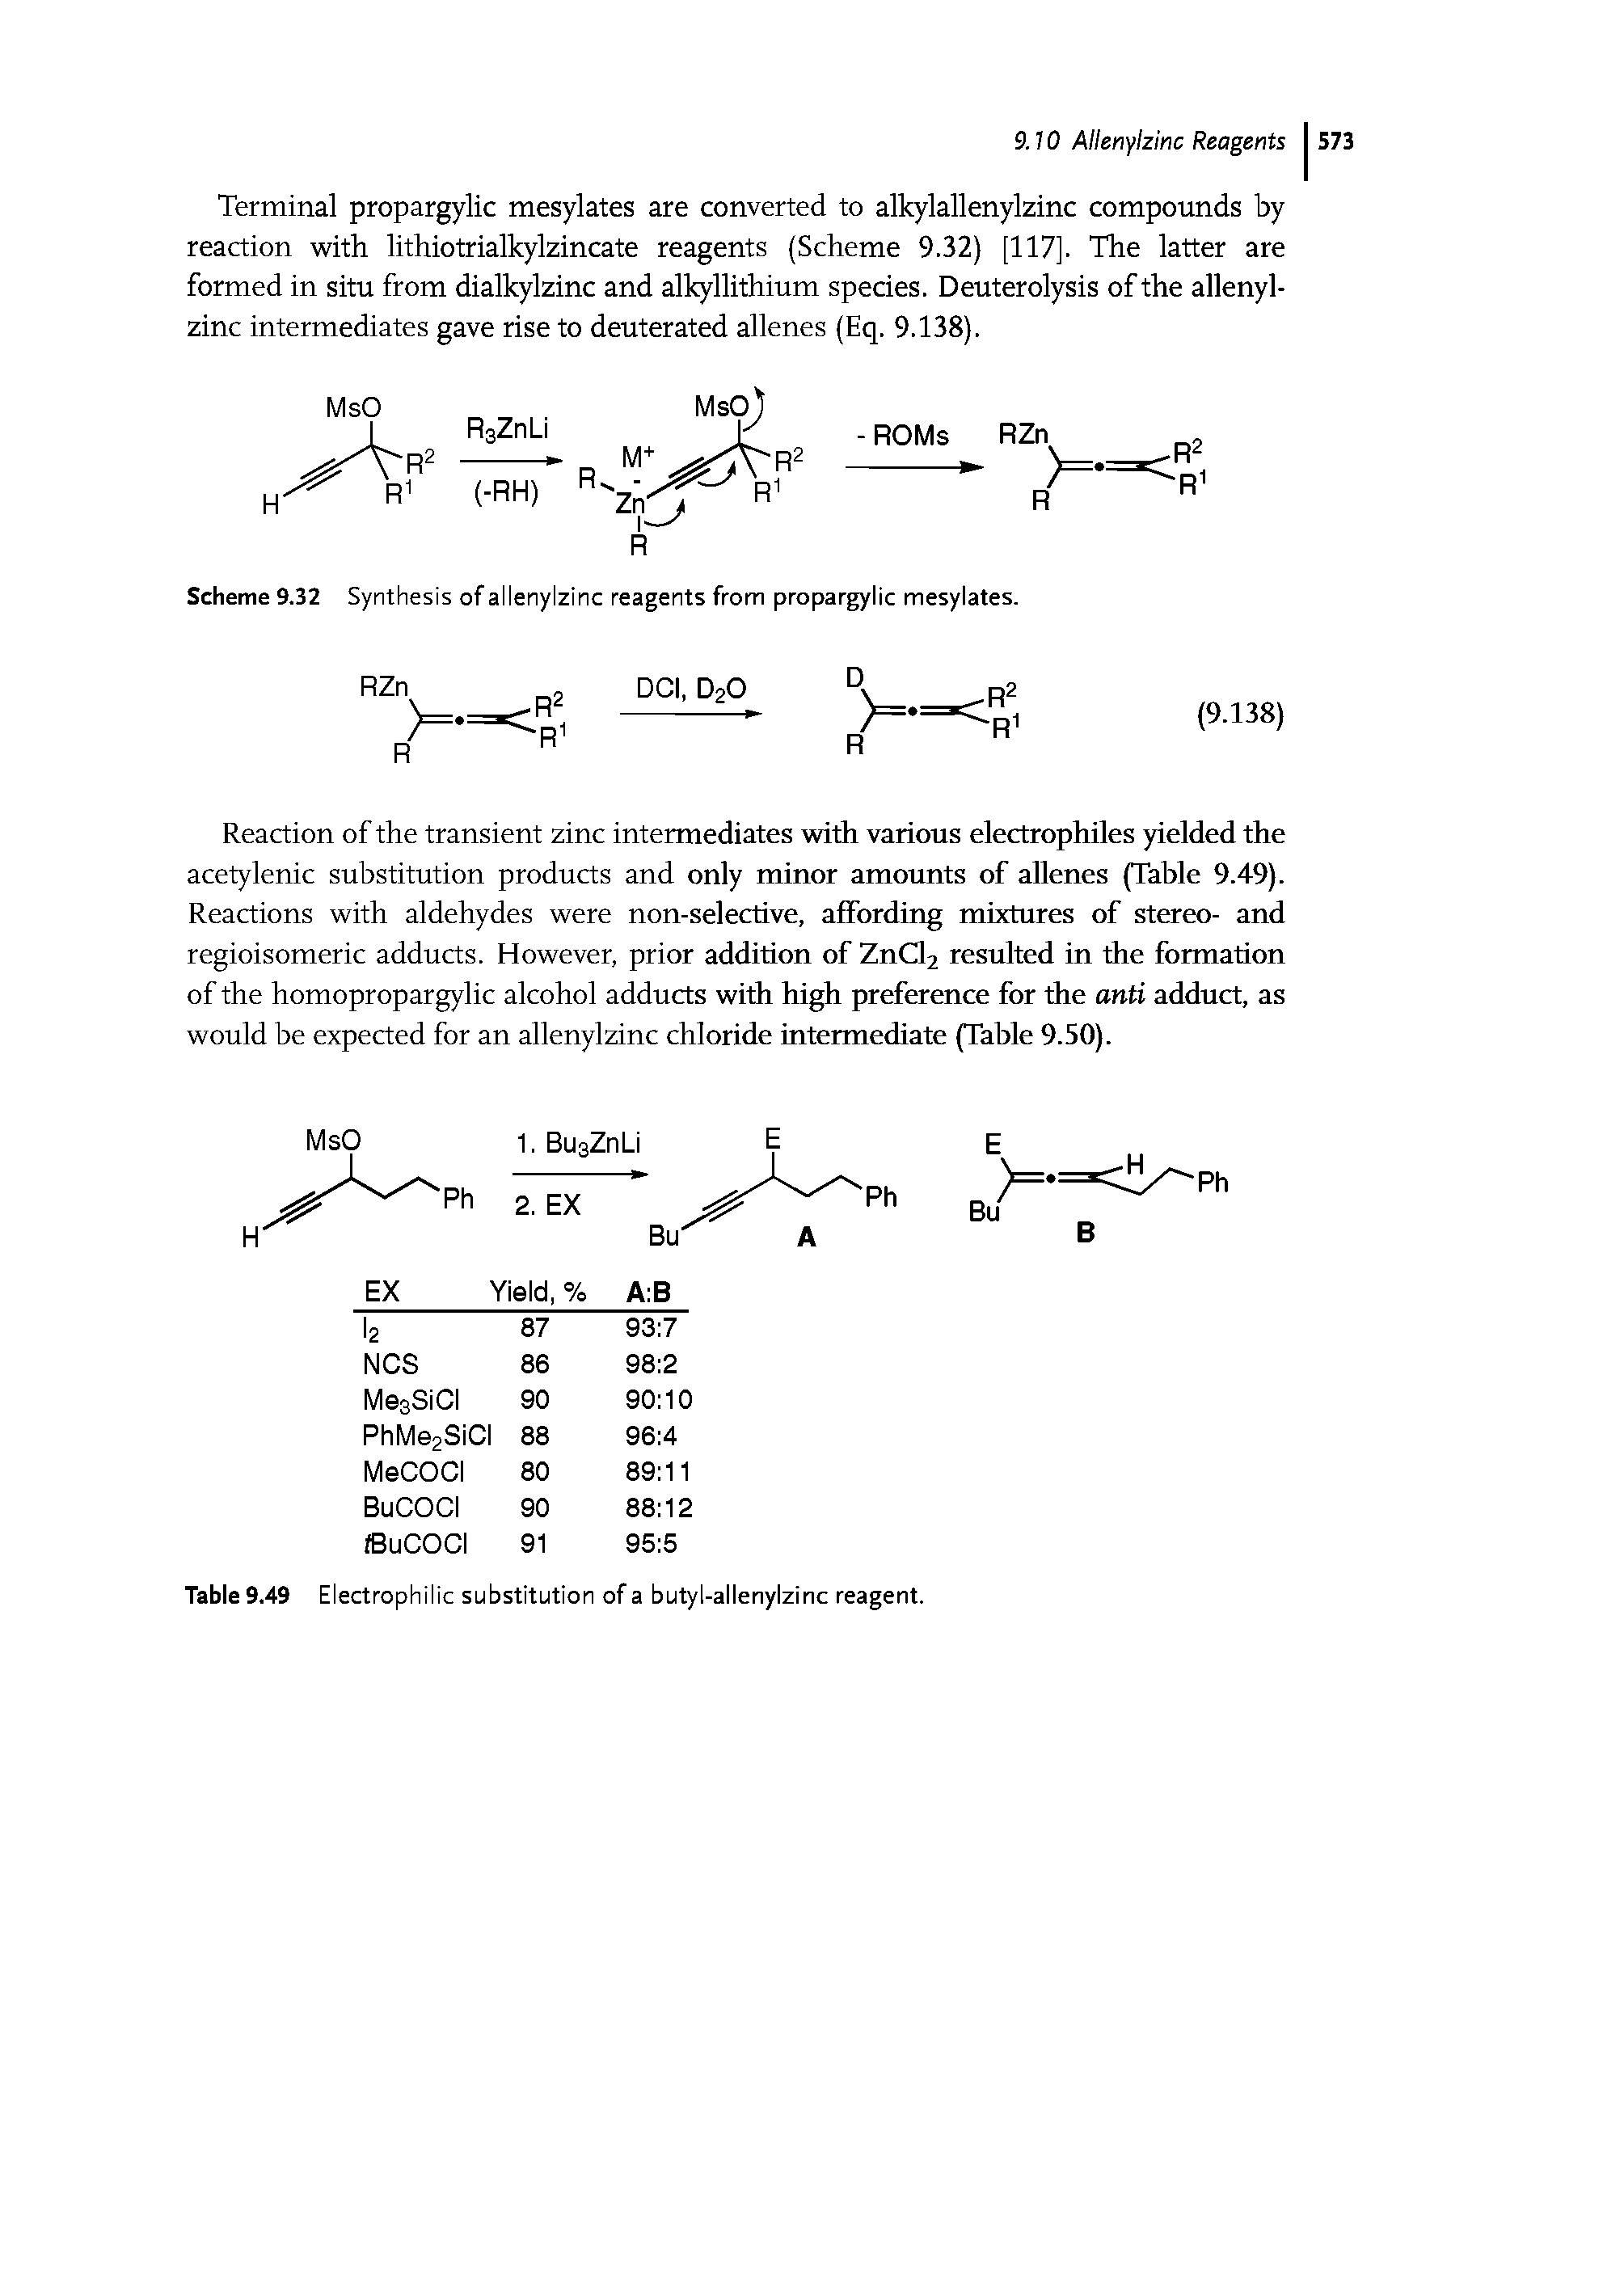 Scheme 9.32 Synthesis of allenylzinc reagents from propargylic mesylates.